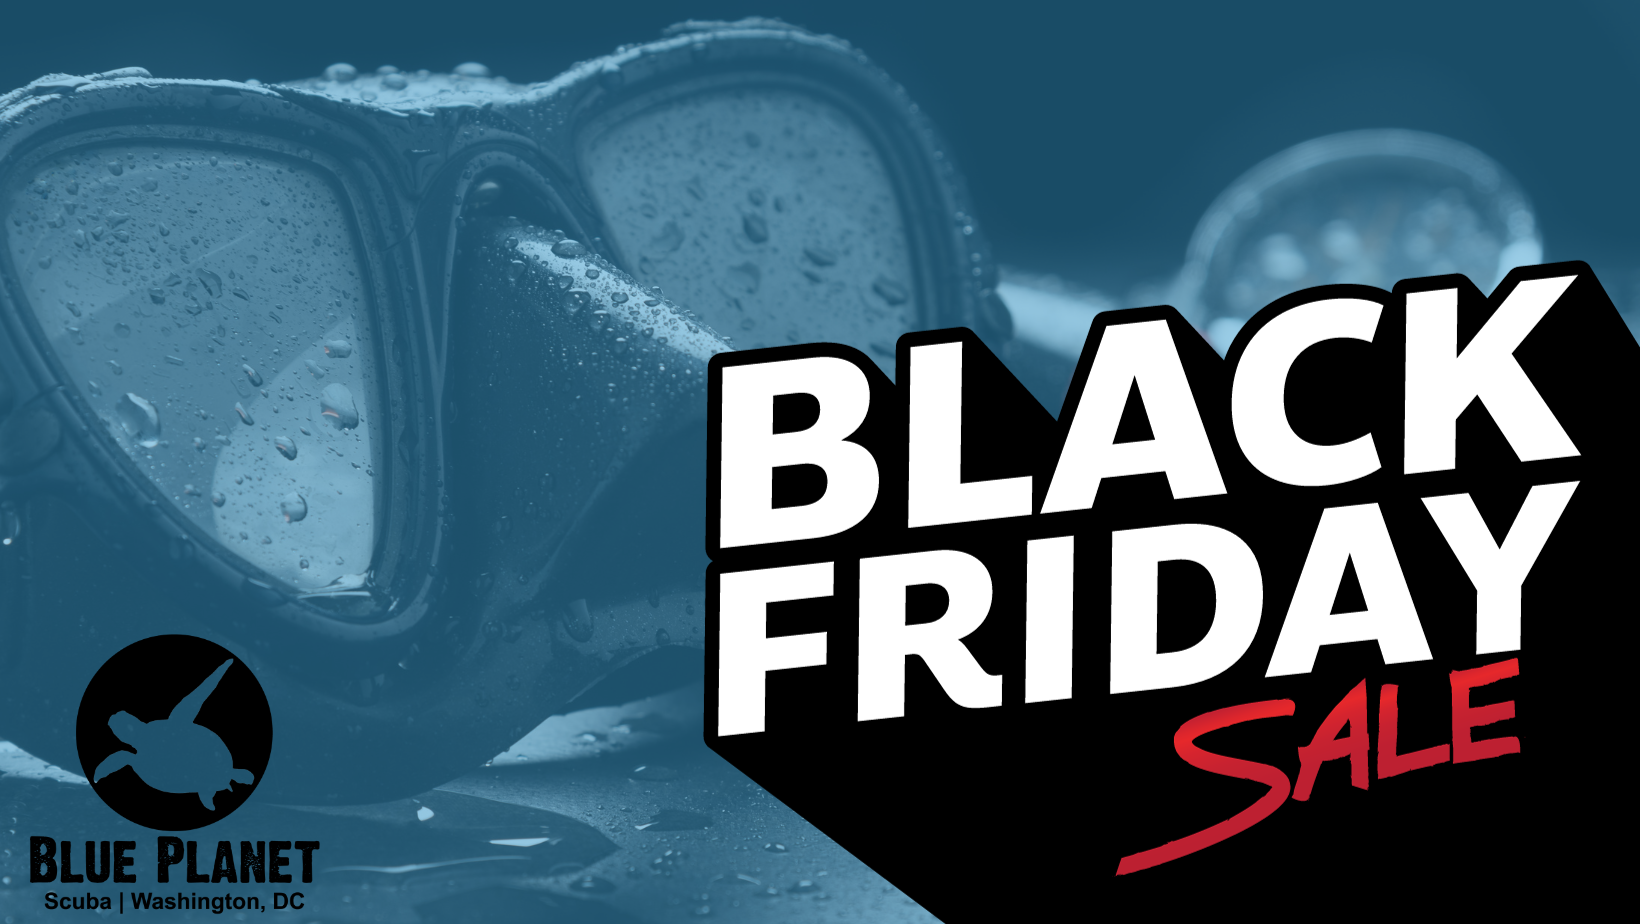 Black Friday And Holiday Sales